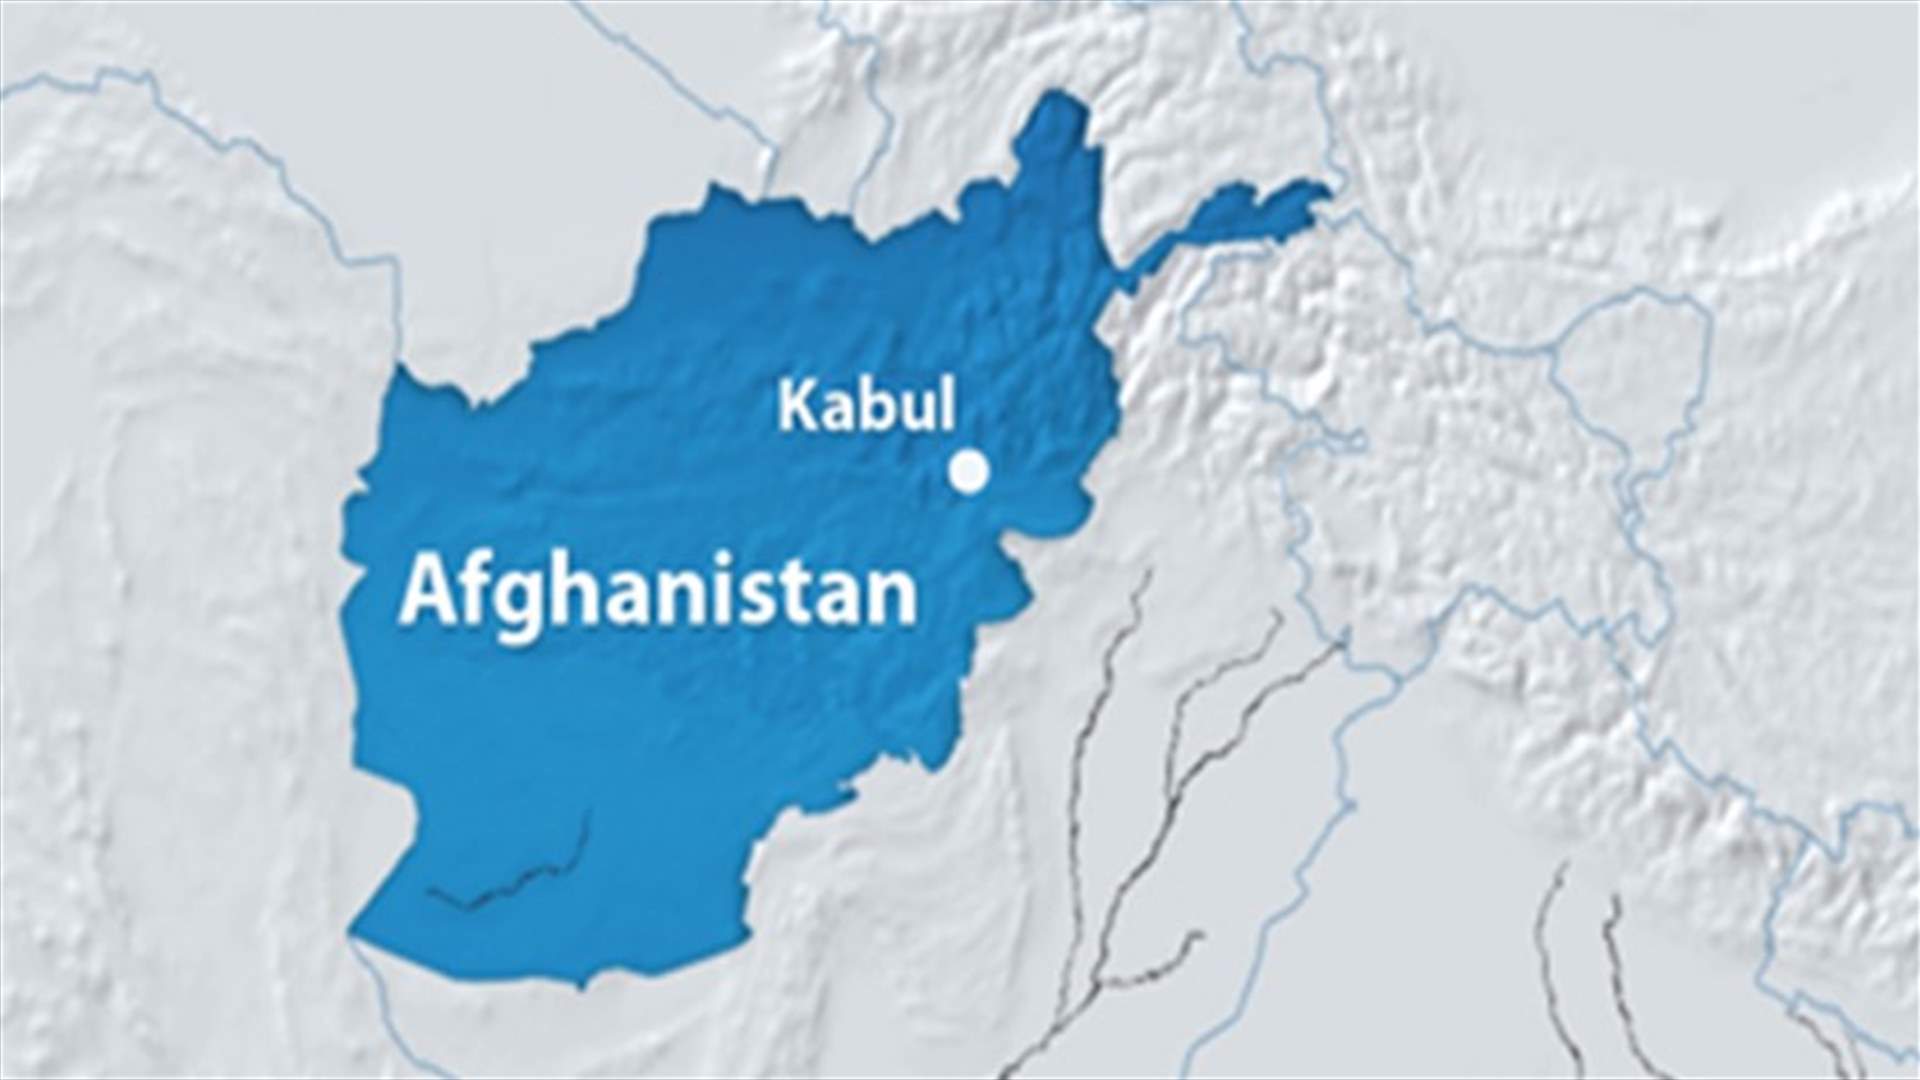 Australian aid worker believed kidnapped in Afghanistan